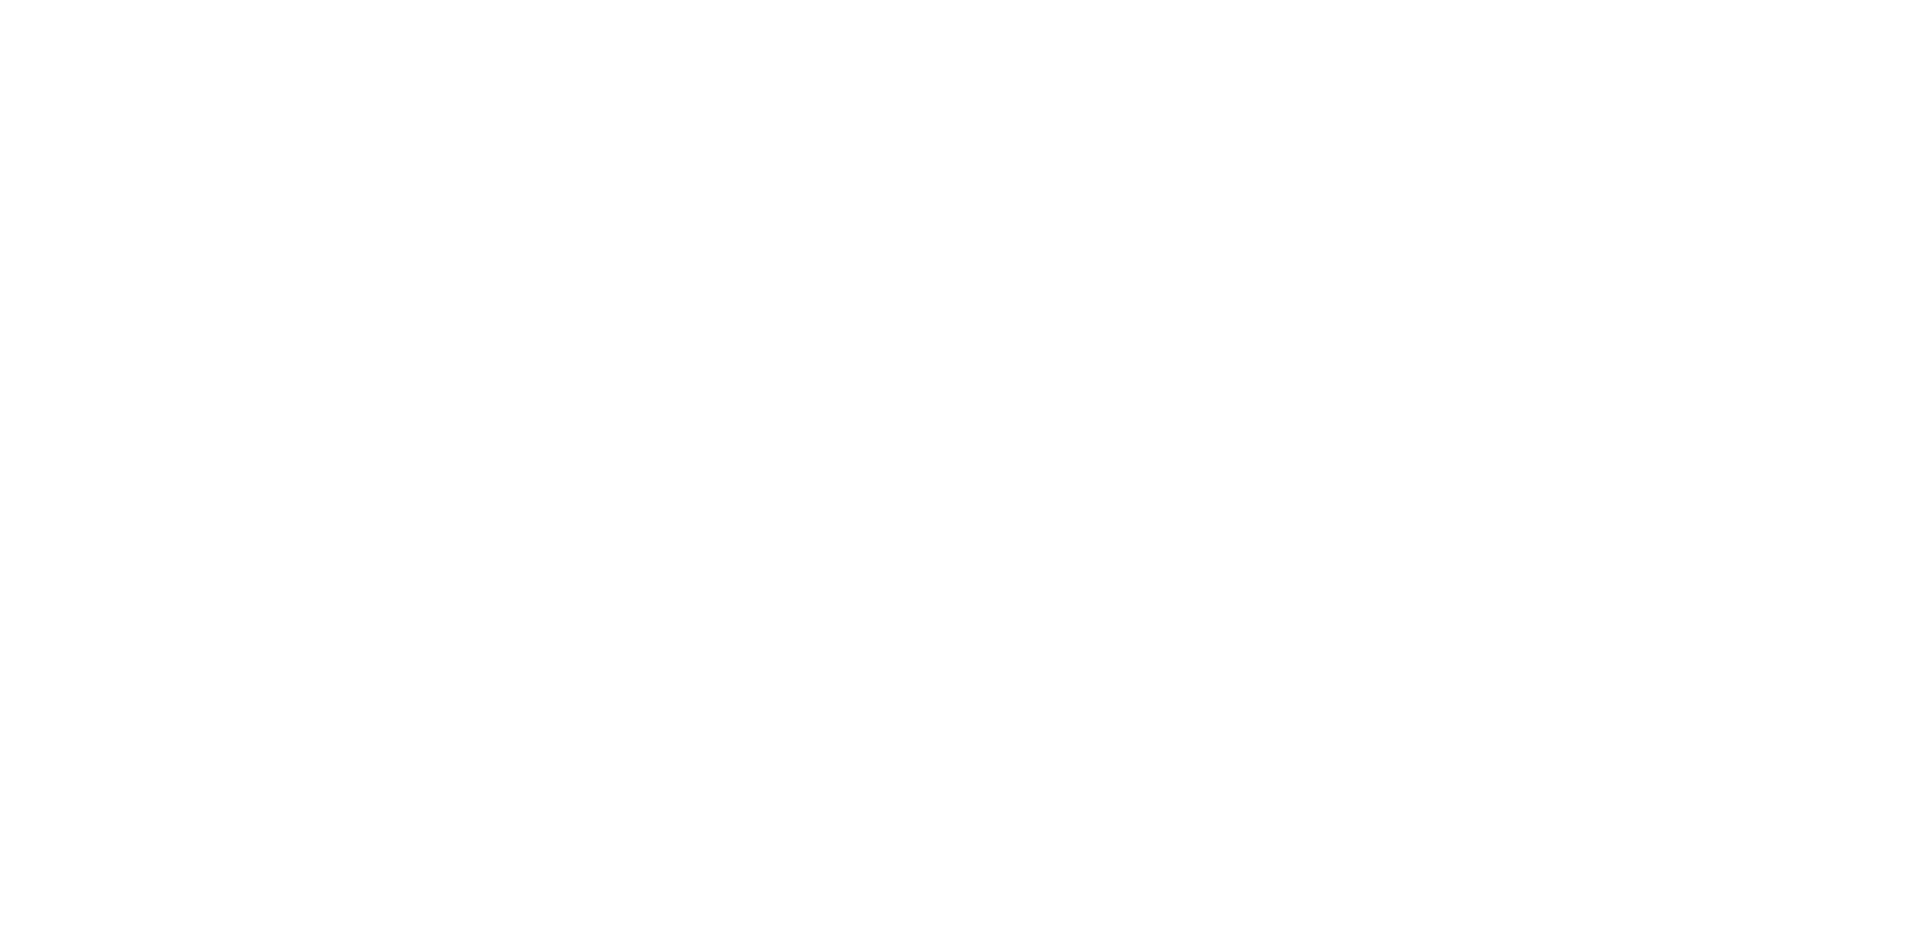 Tenth, Bioengineering at the University of Texas at Dallas